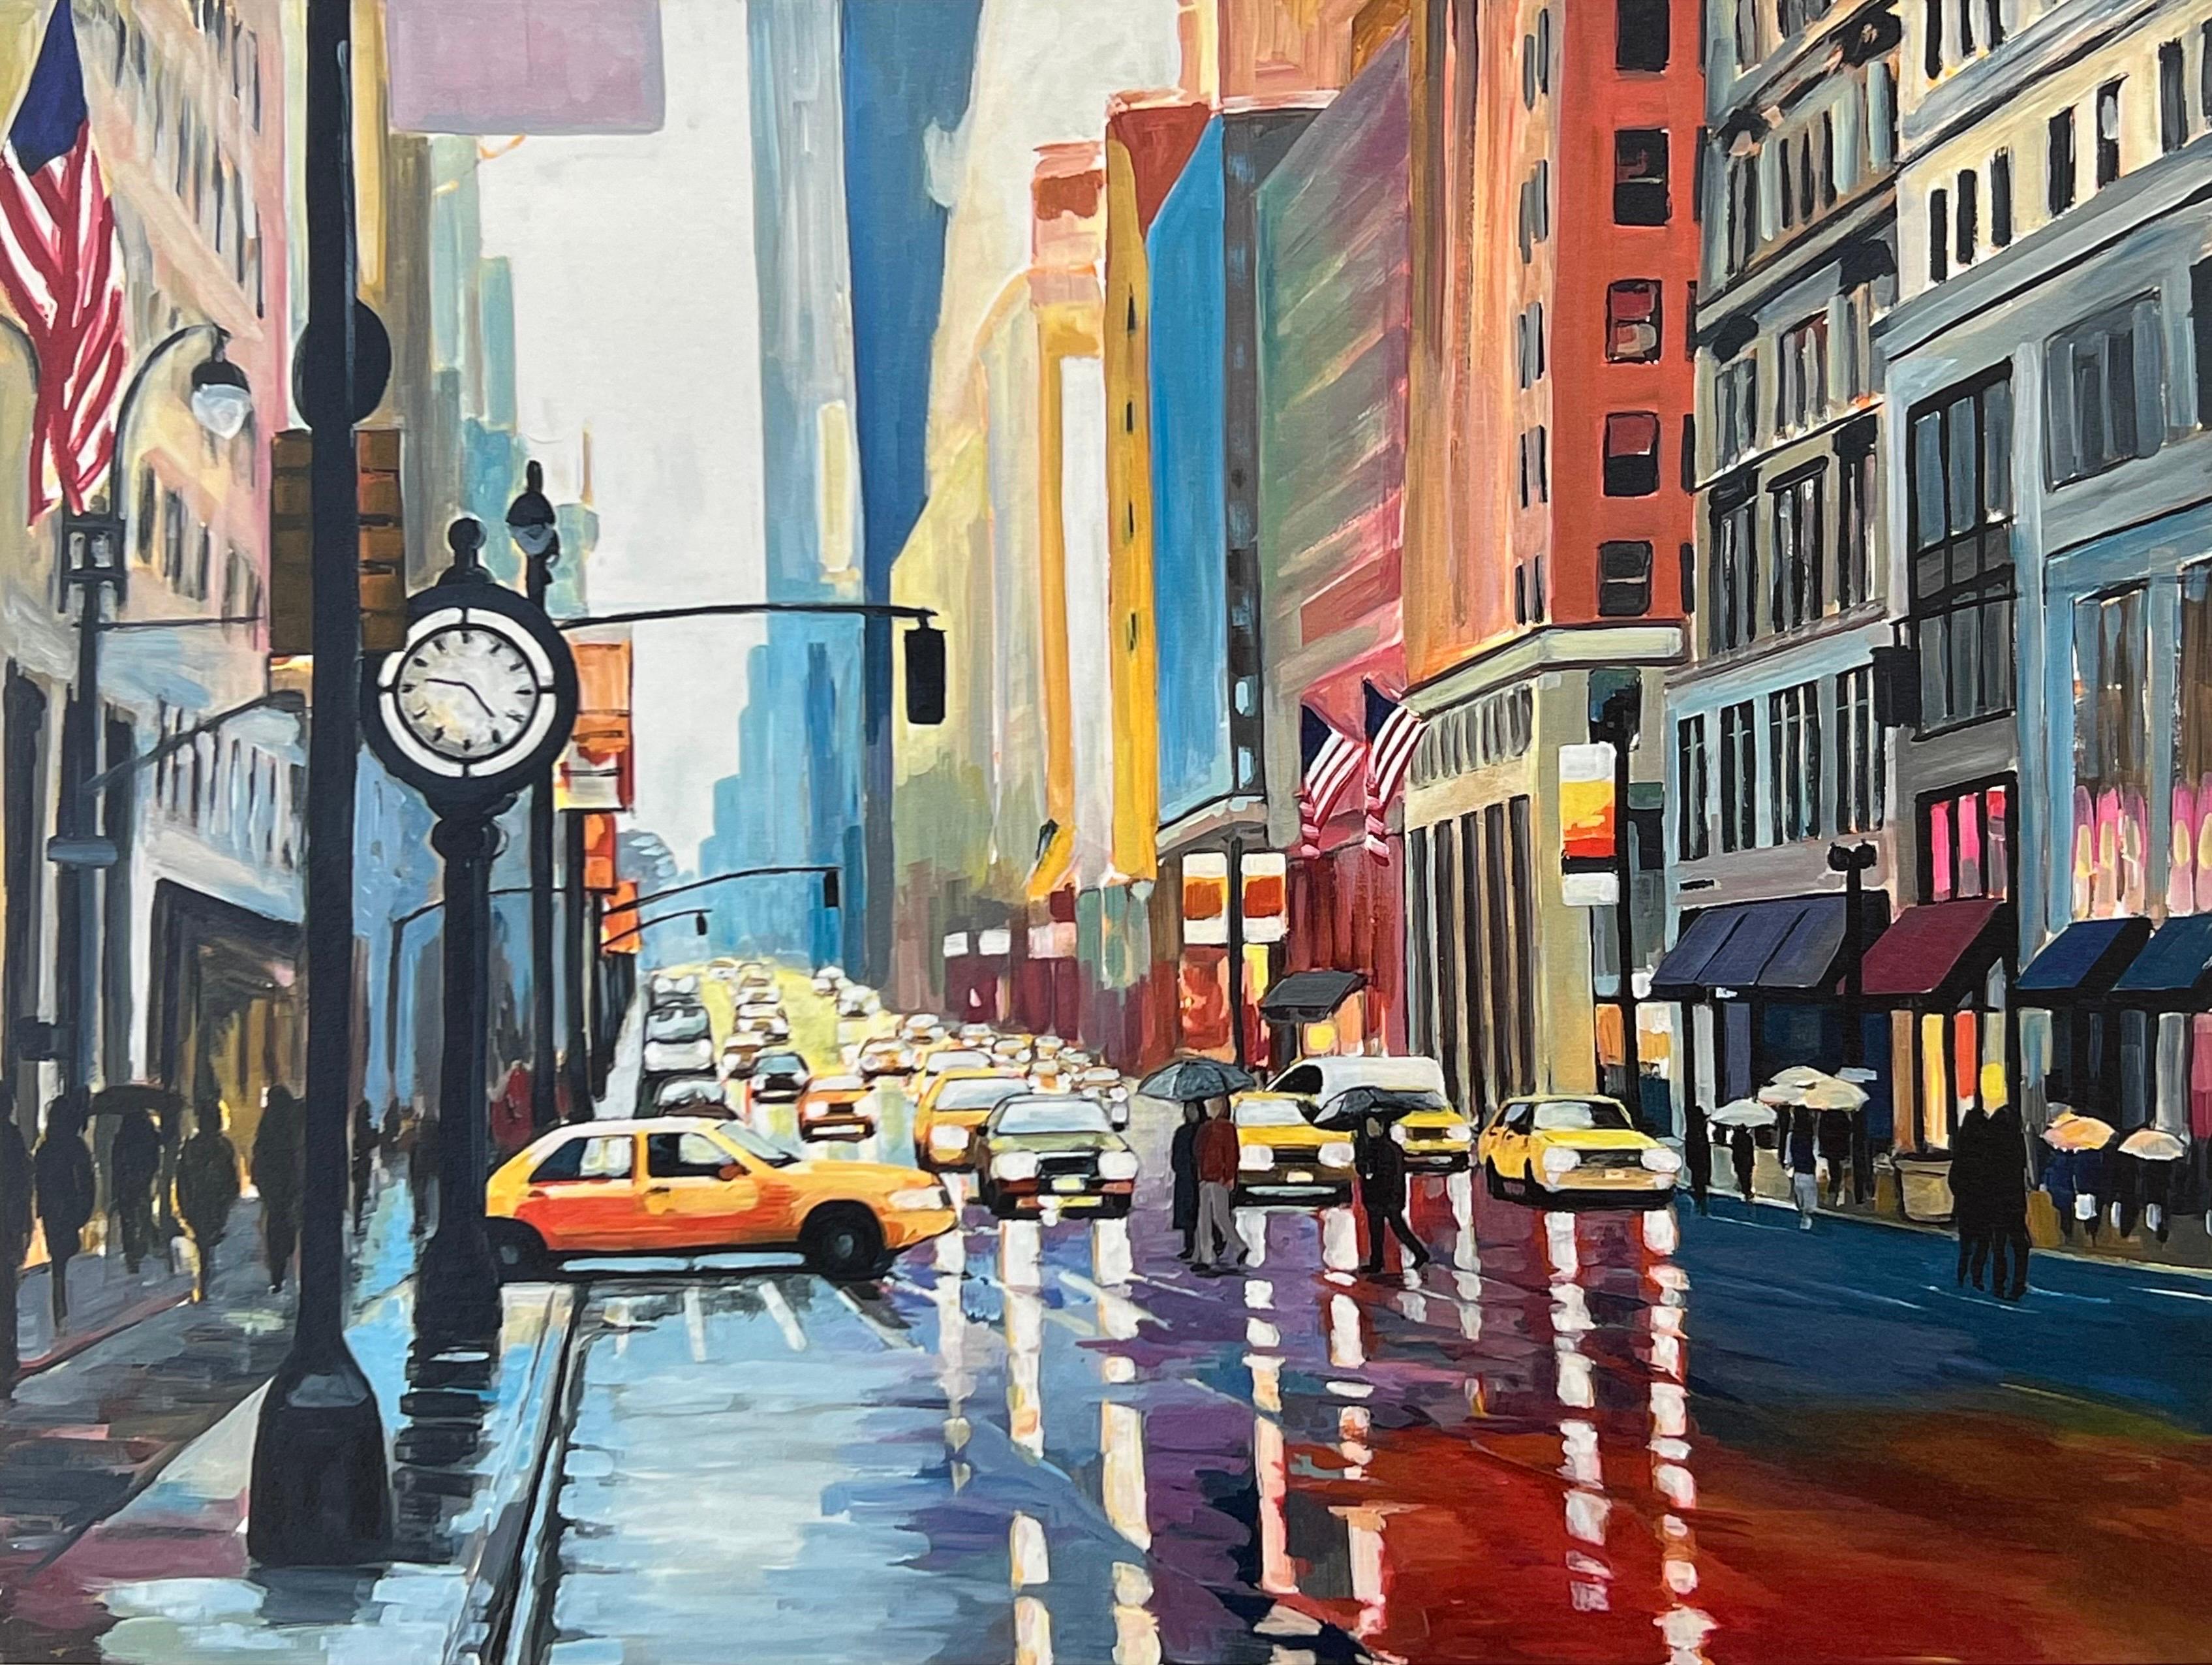 Angela Wakefield Landscape Print - High Quality Print of New York Rain III Painting by leading British Urban Artist